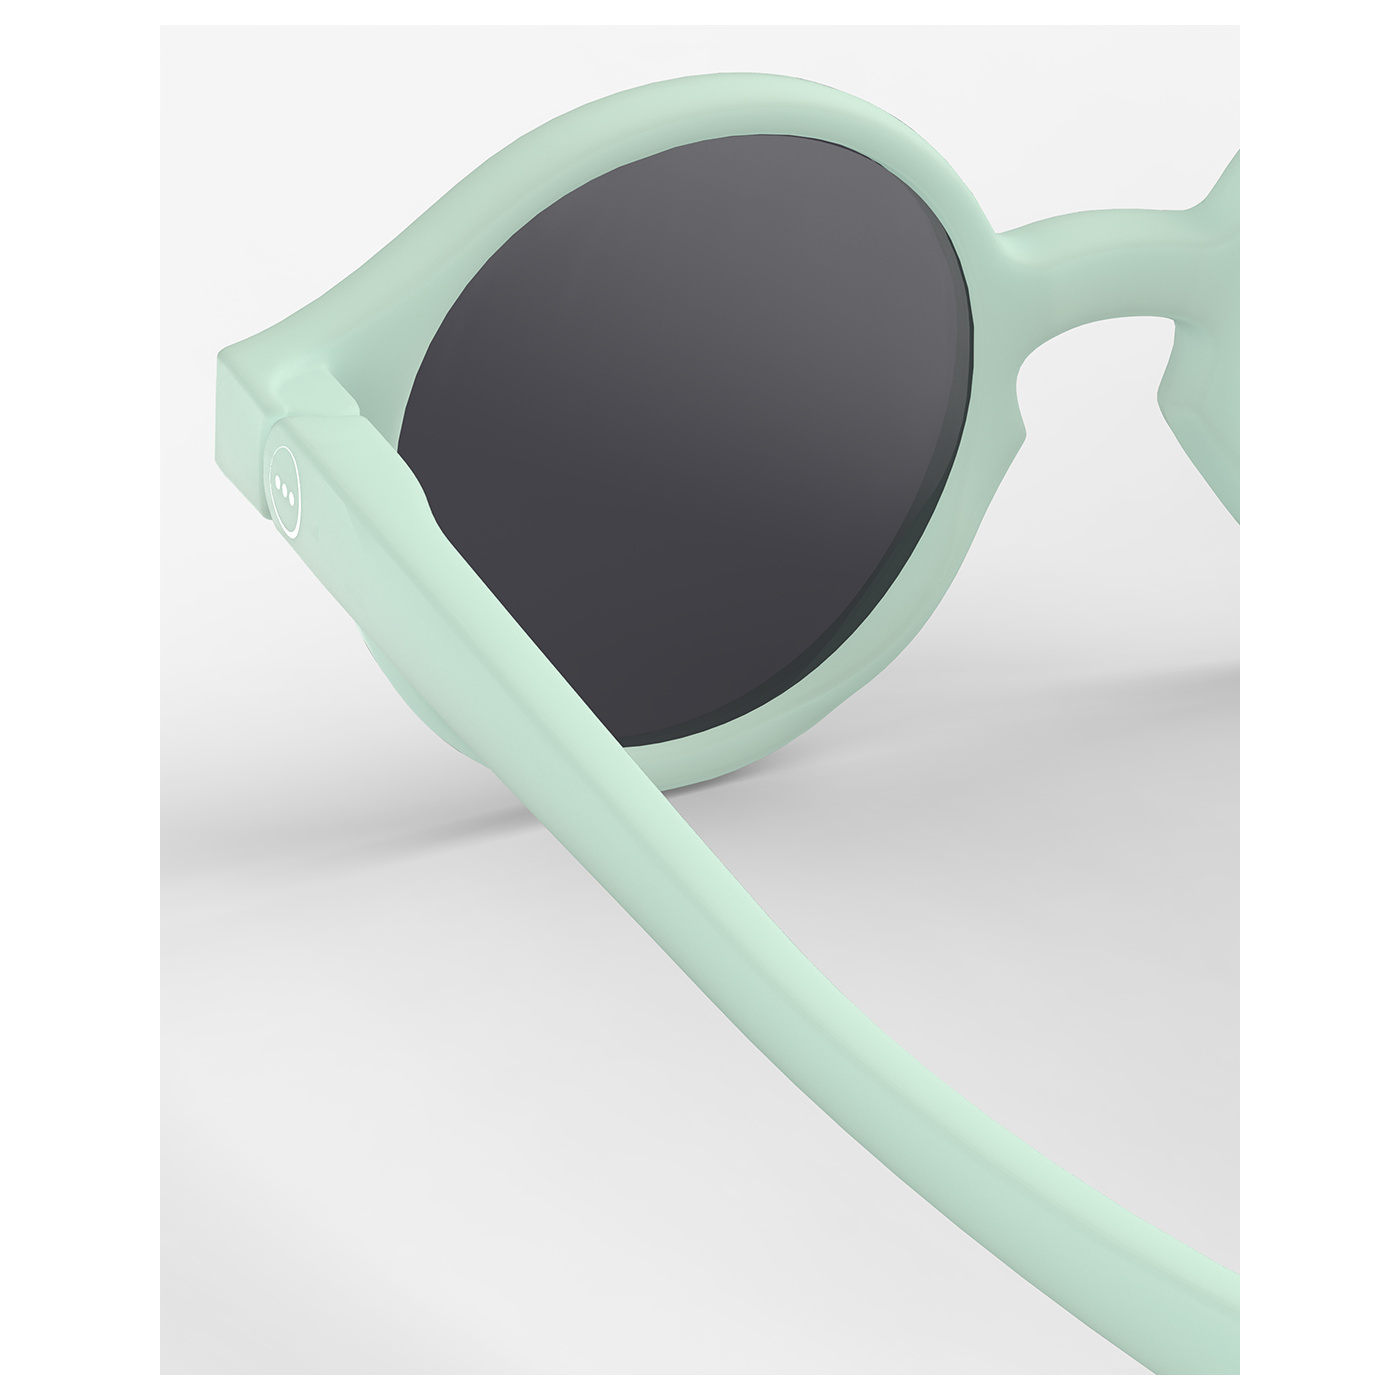 Izipizi Sunglasses  kids 9-36 mnd  #D | Aqua Green